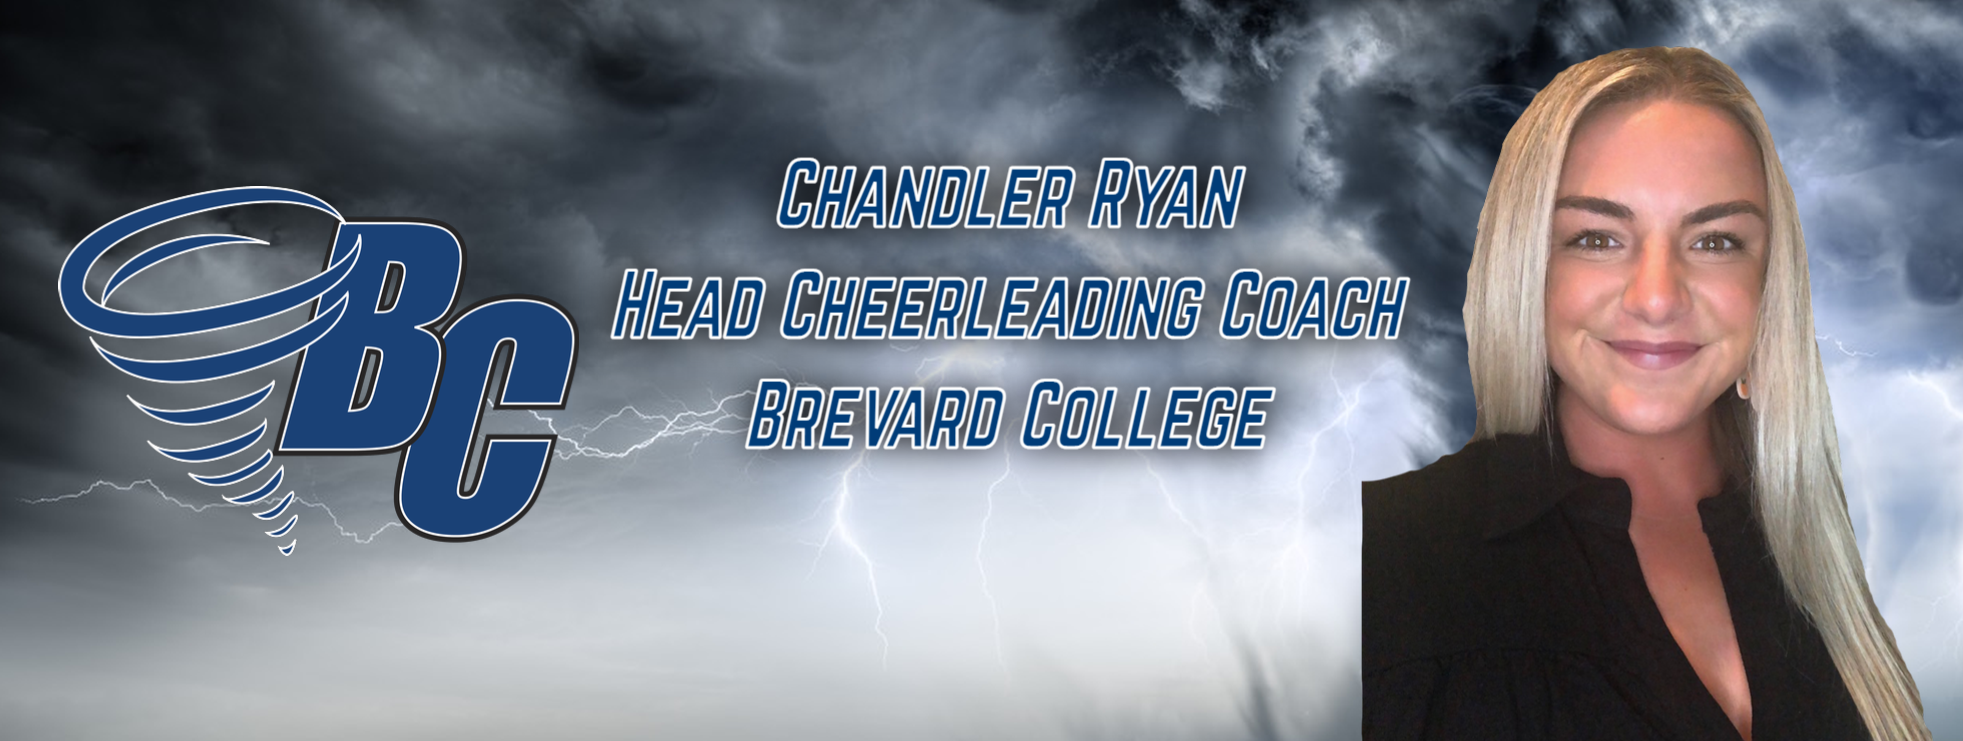 Chandler Ryan Named Brevard College Head Cheerleading Coach